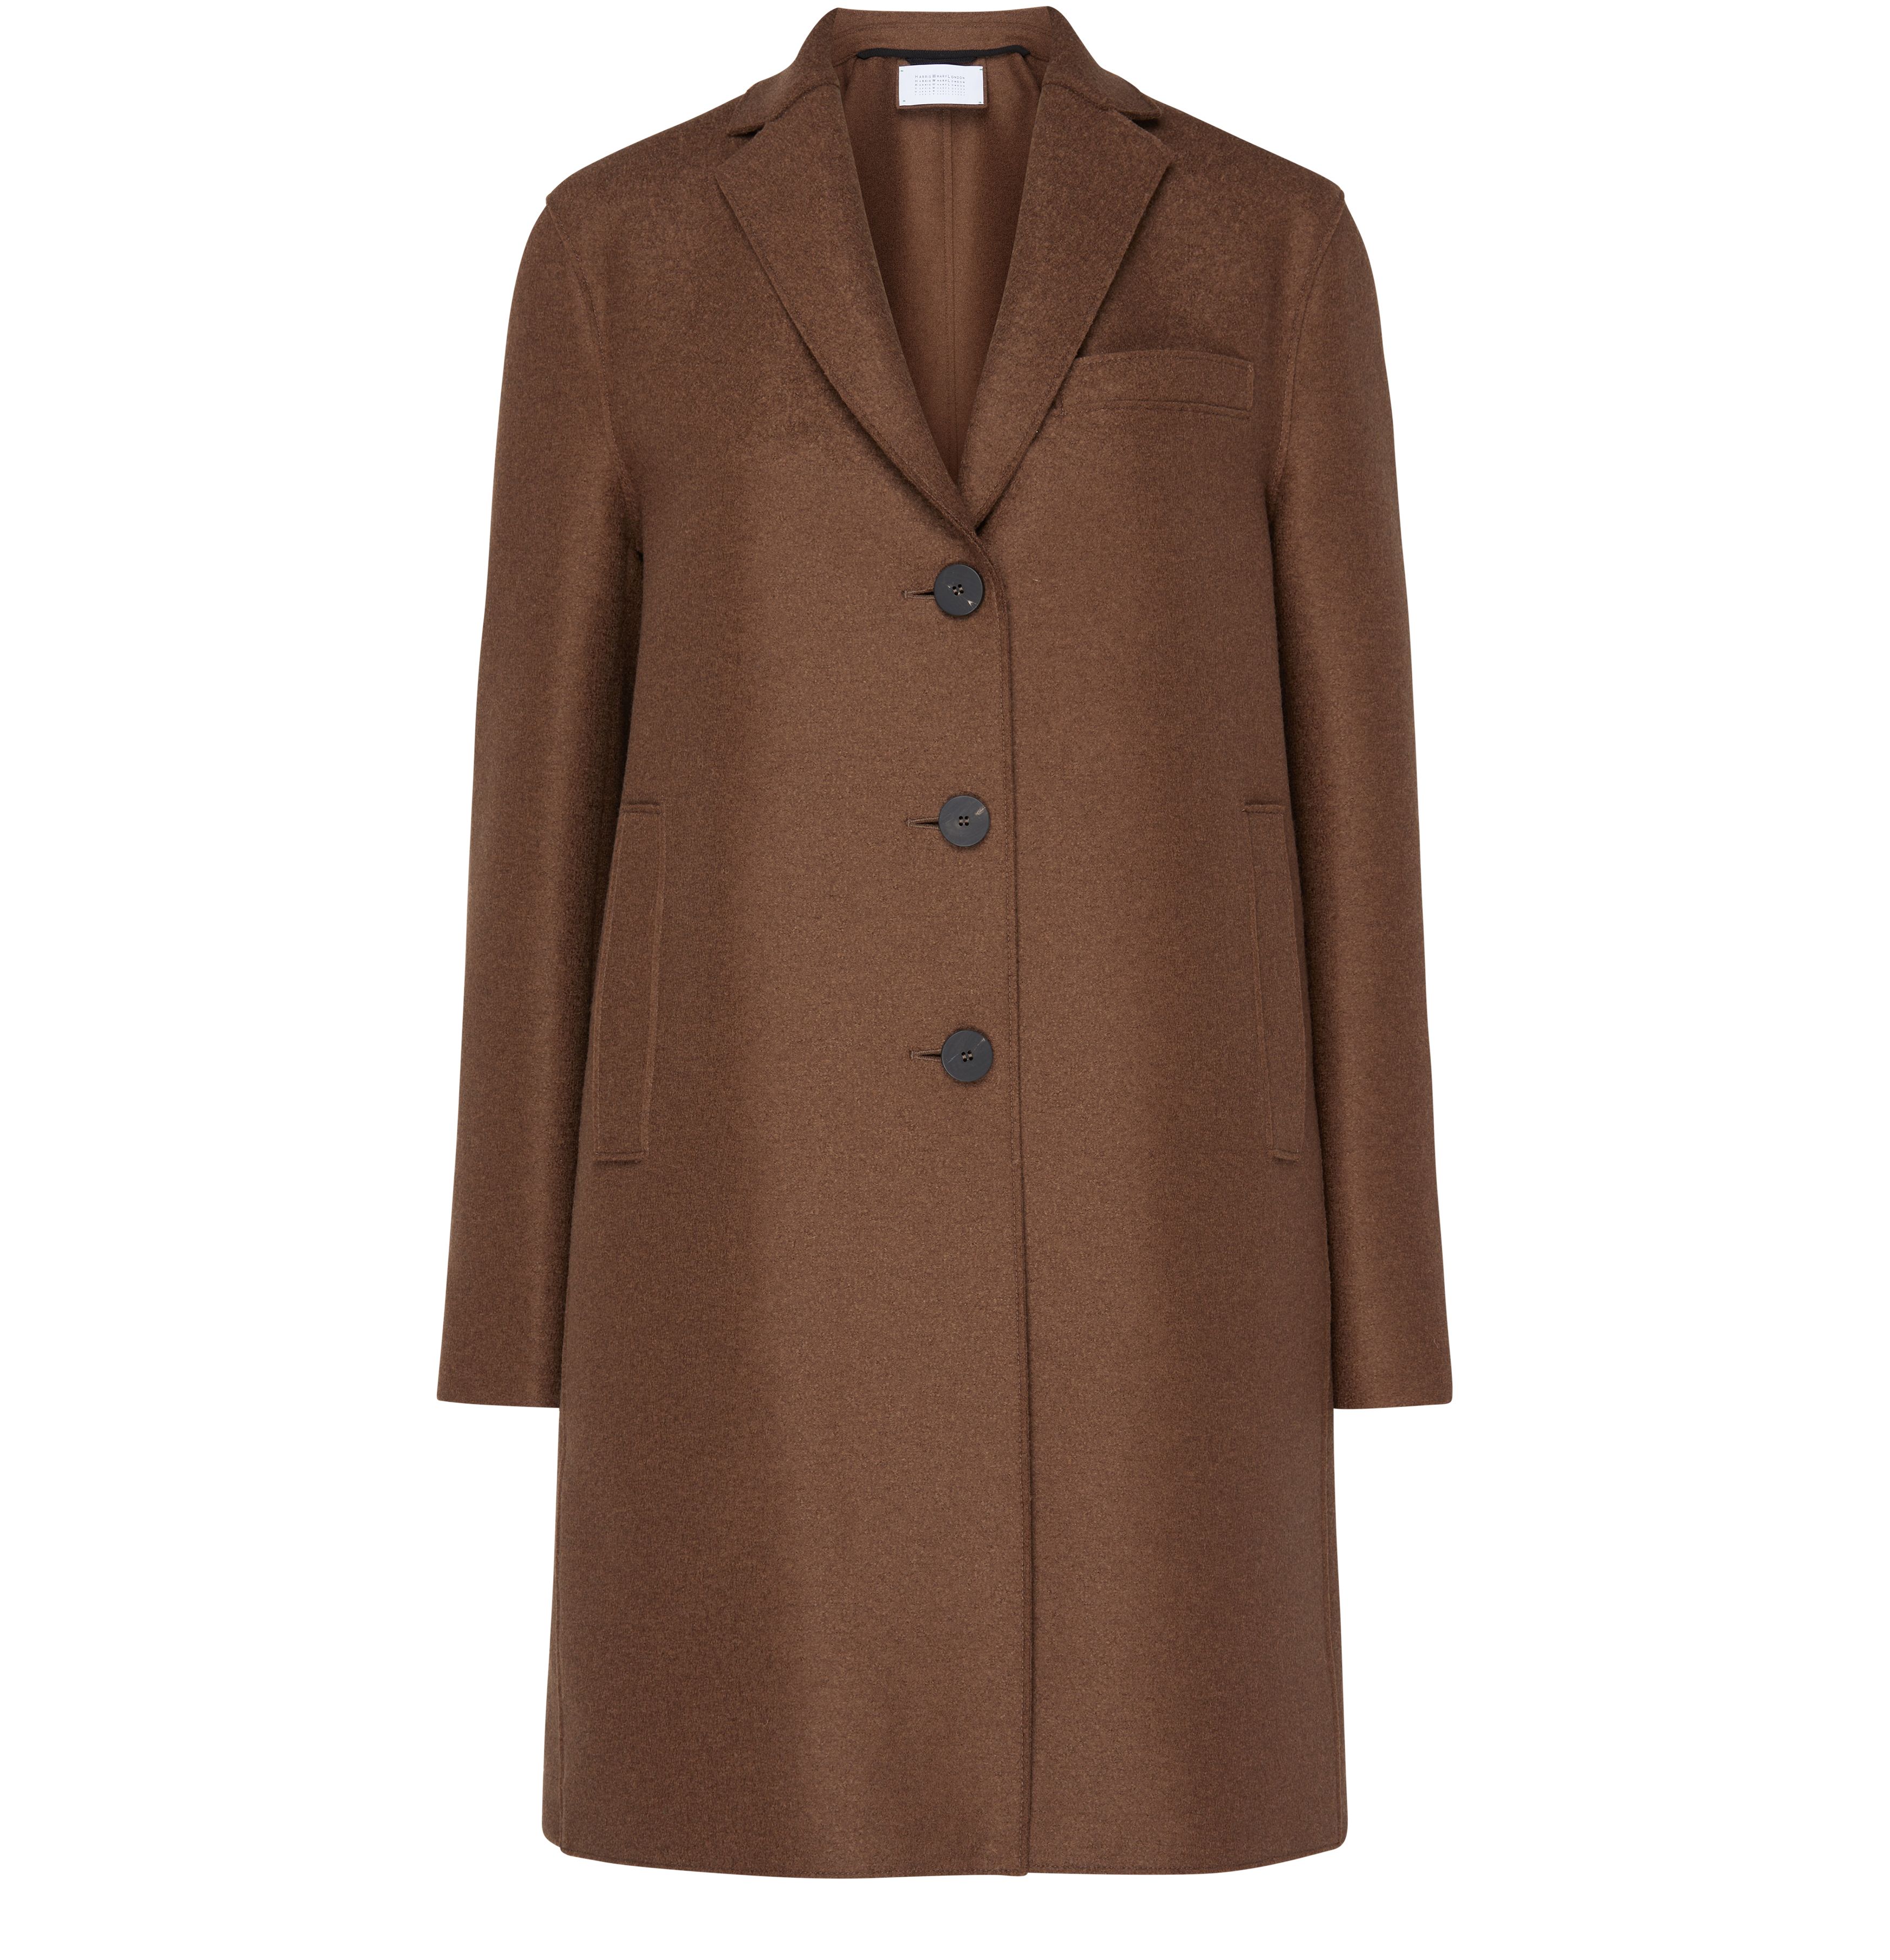 HARRIS WHARF LONDON Wool coat